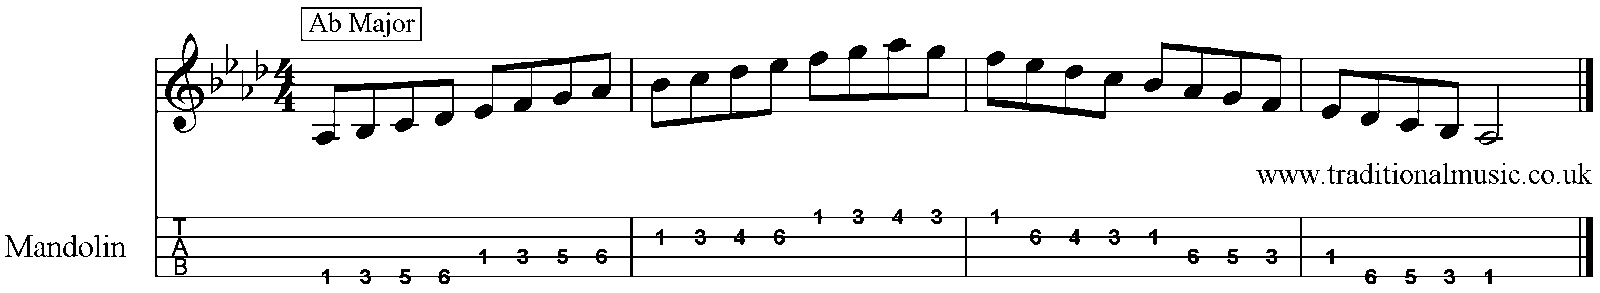 Major Scales for Mandolin Ab